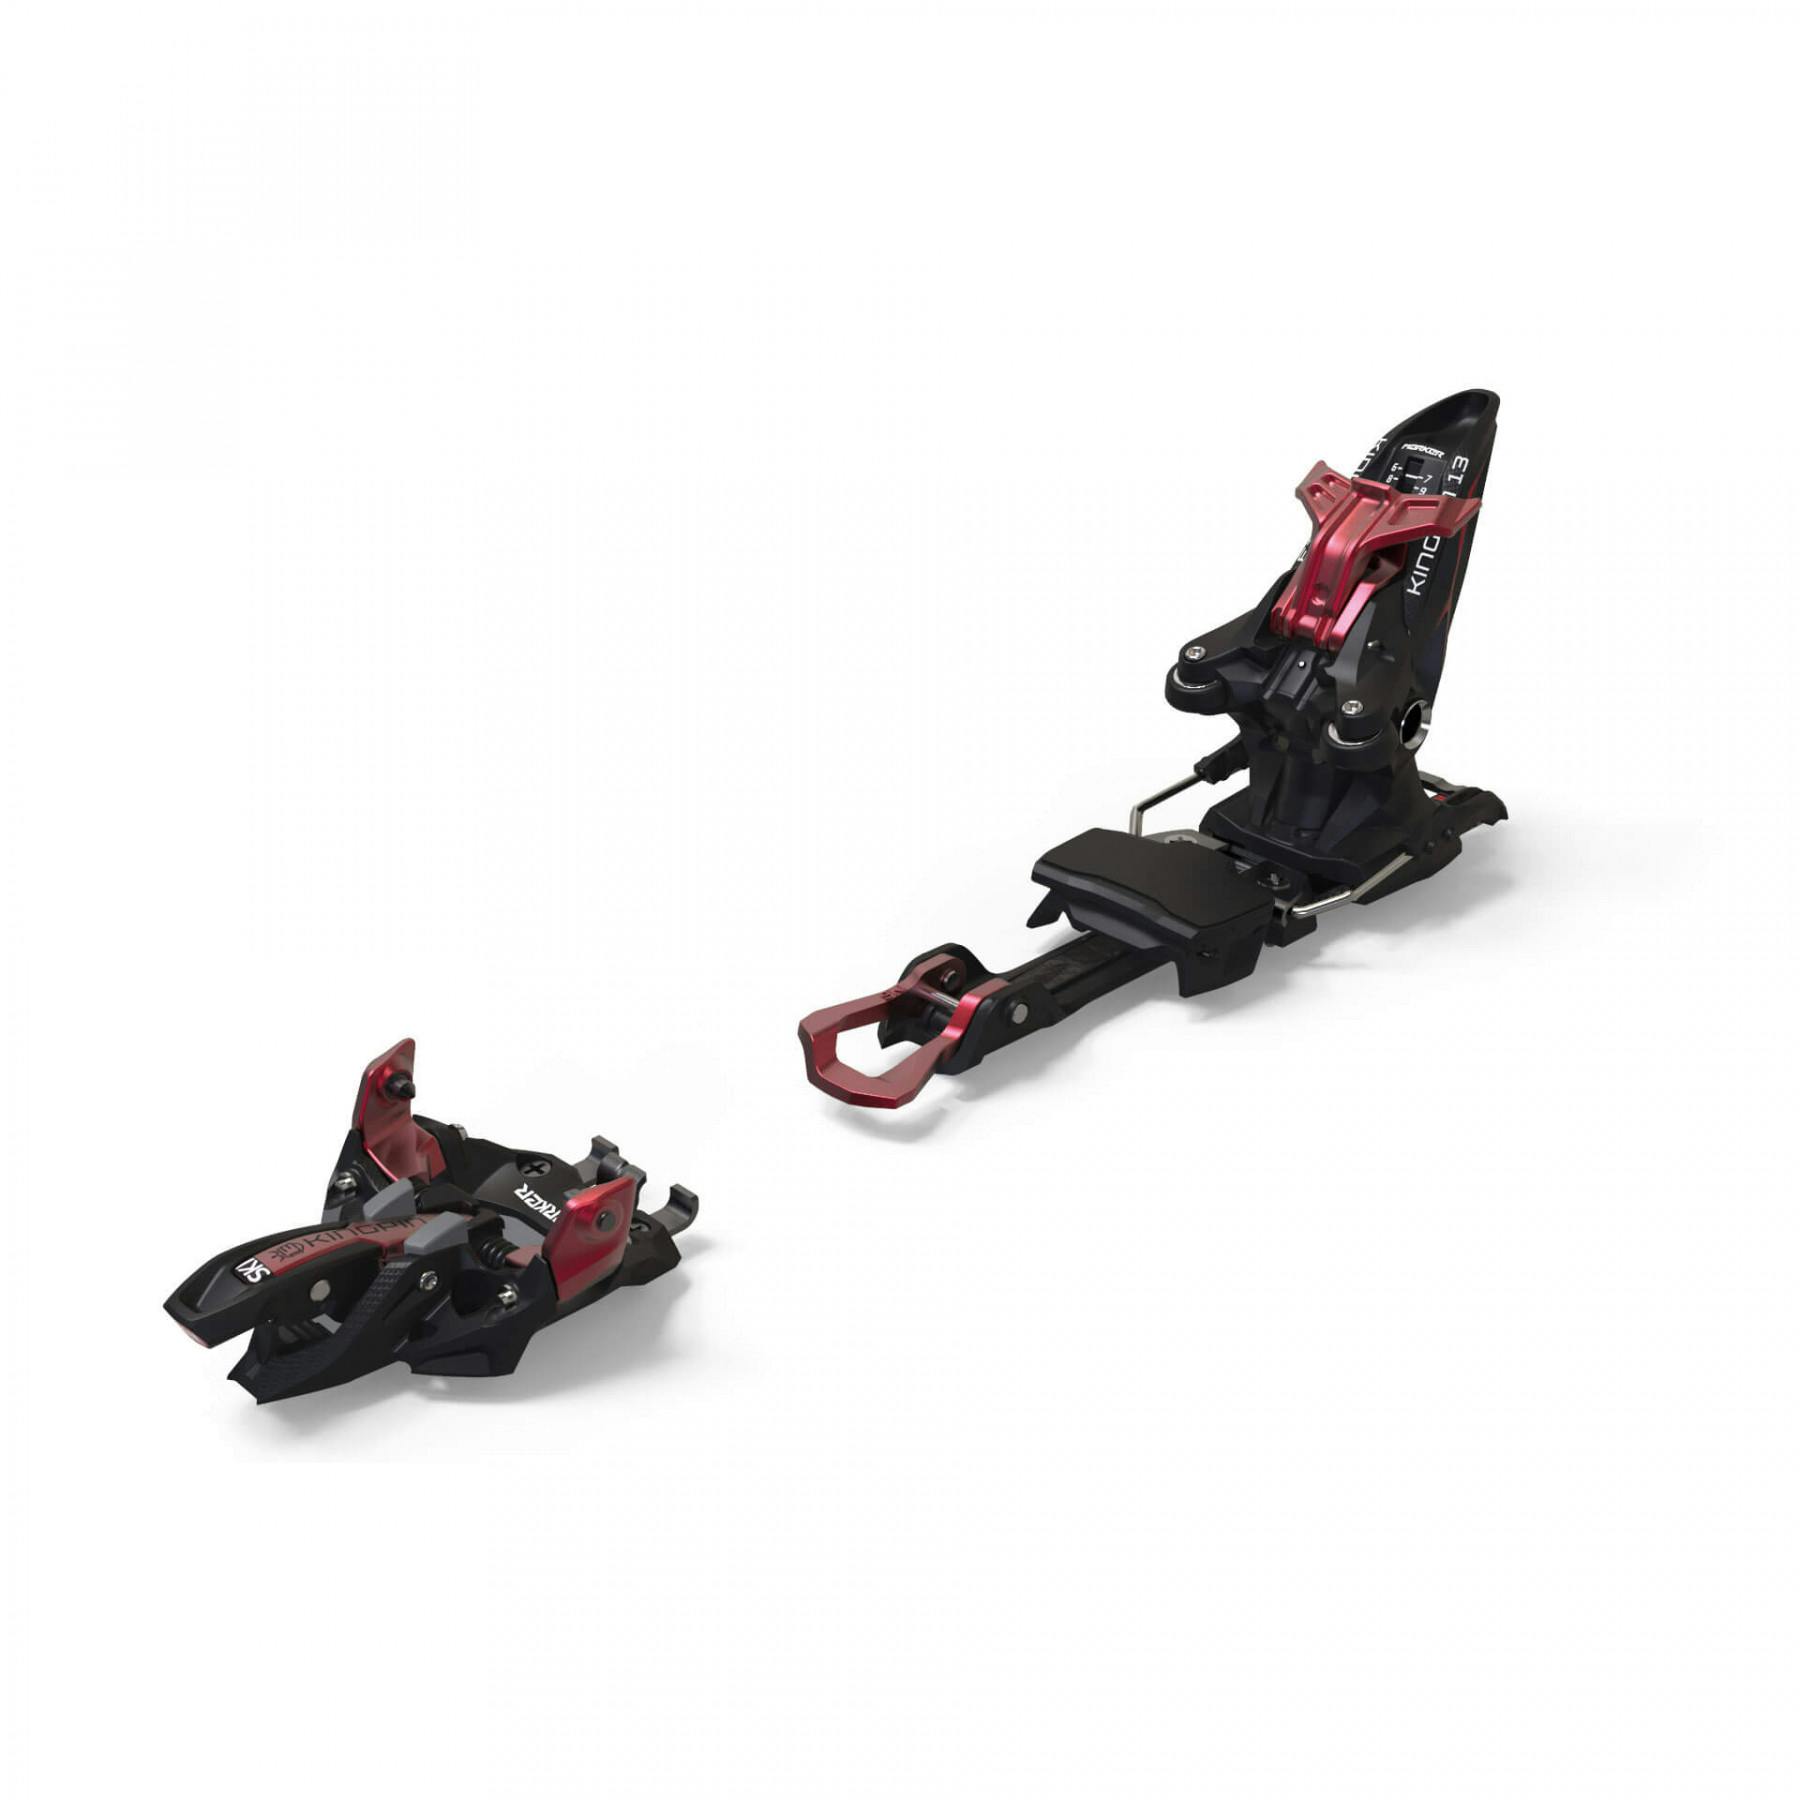 Marker Kingpin 13 Ski Bindings 100 Black/red